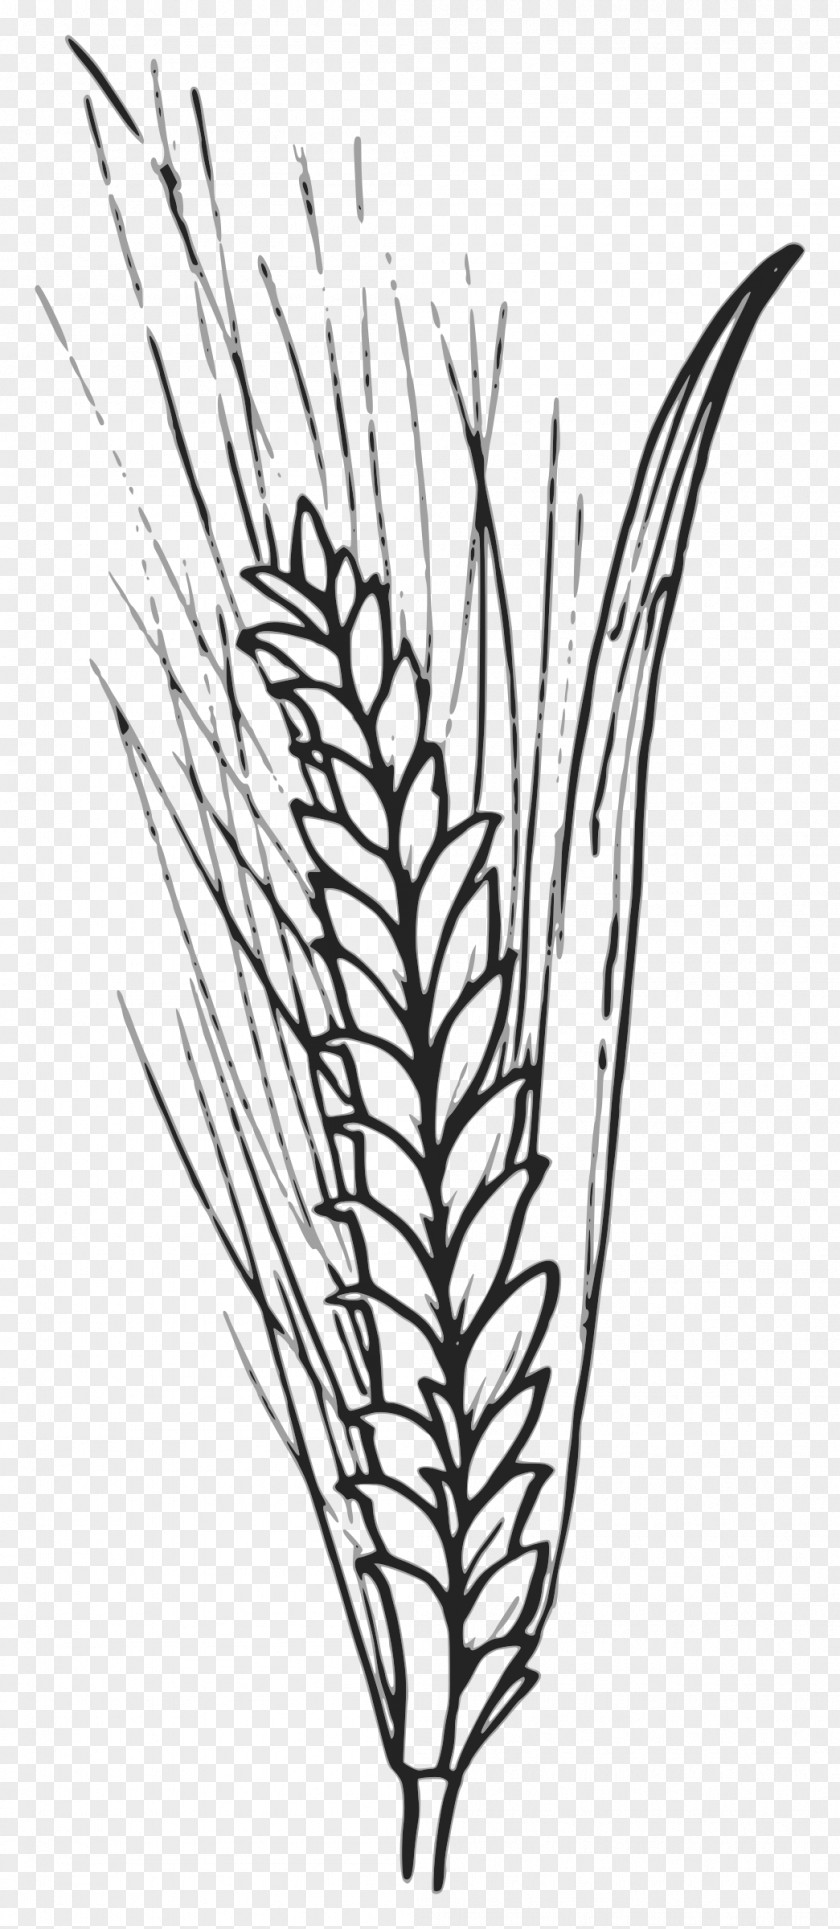 Barley Vector Wheat Grain Cereal Clip Art PNG